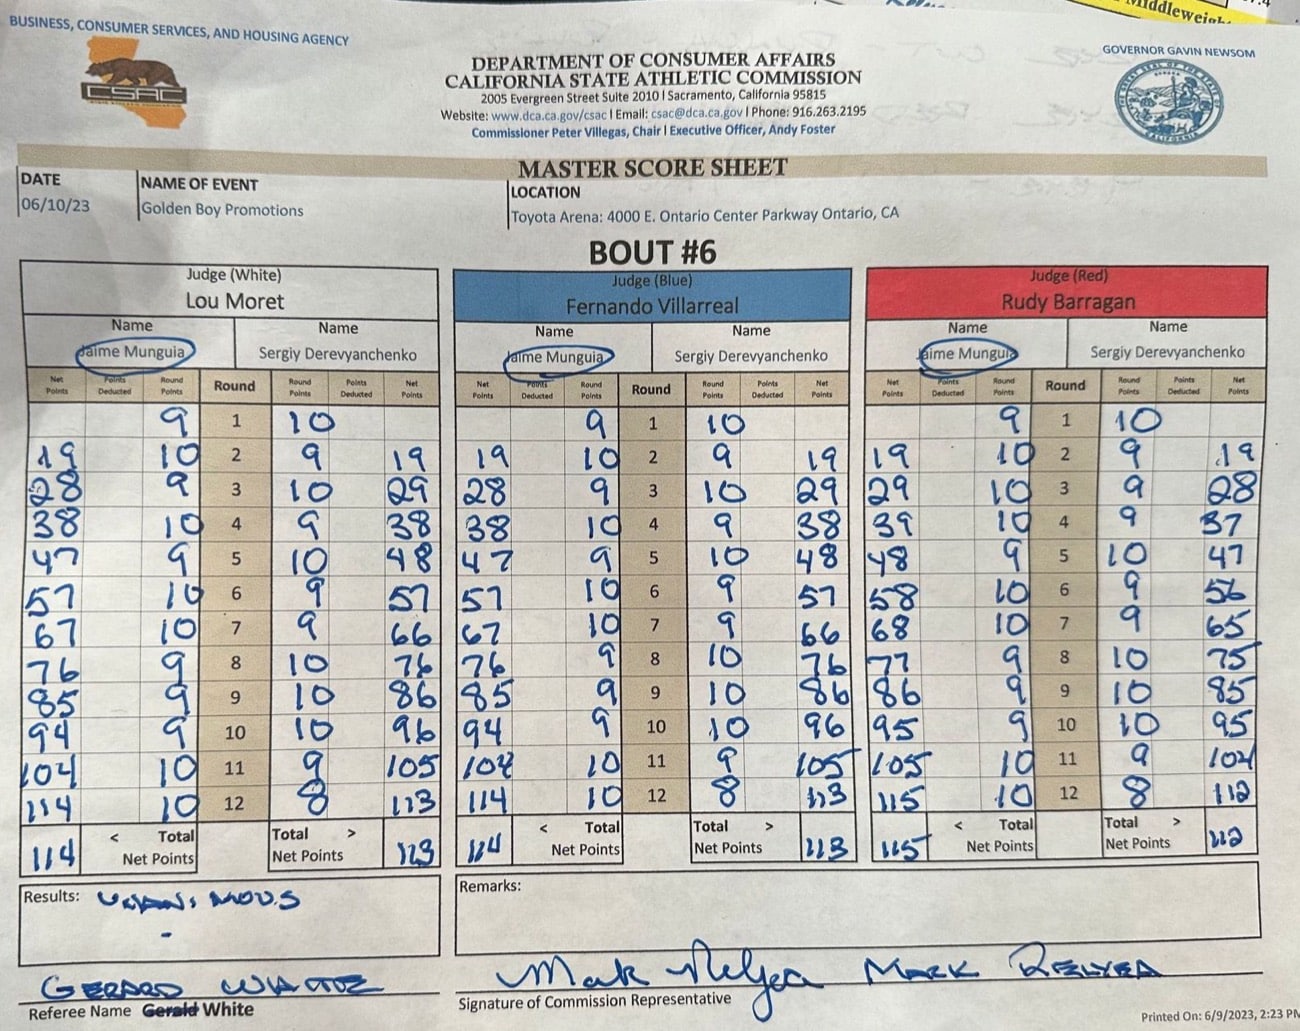 Jaime Munguia edges Sergiy Derevyanchenko - Boxing results